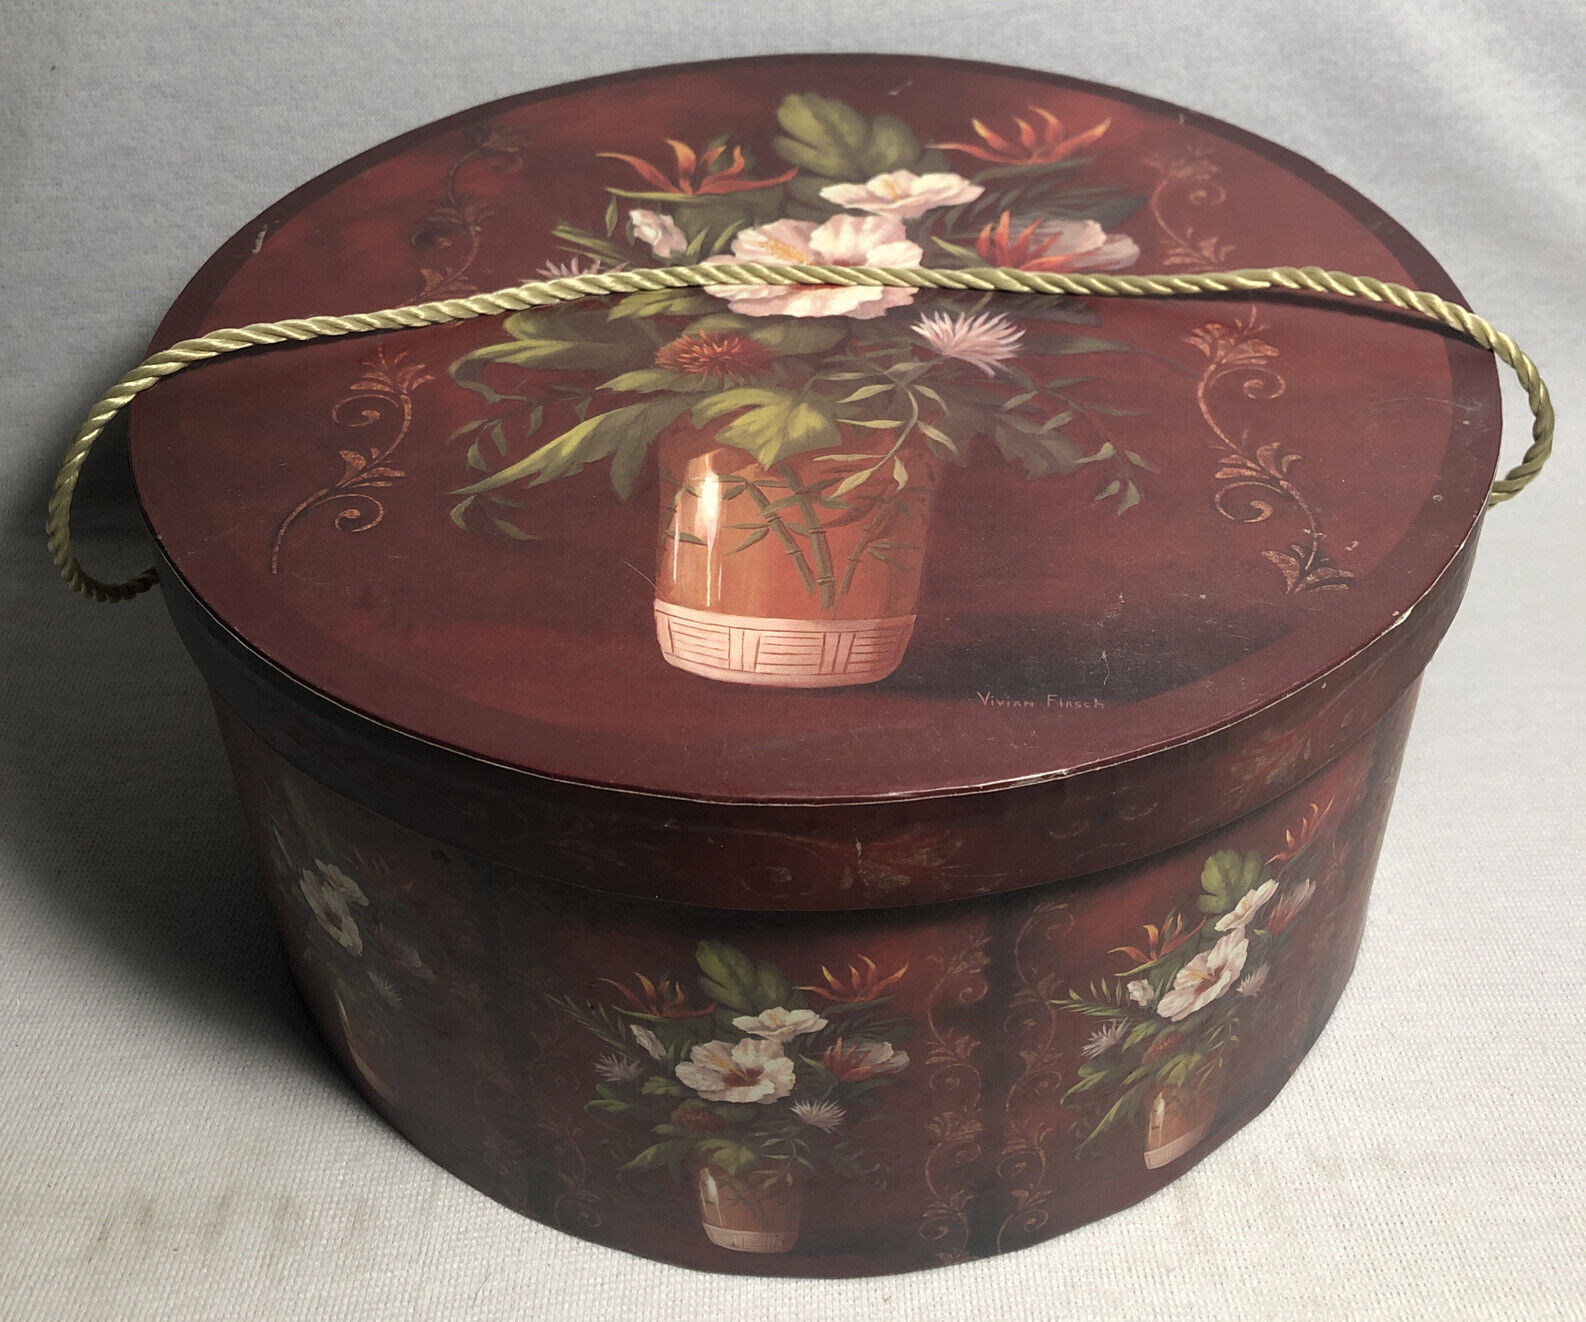 2005 The Lindy Bowman Company Vivian Finsch 12”x 5.75” Red Floral Hat Box